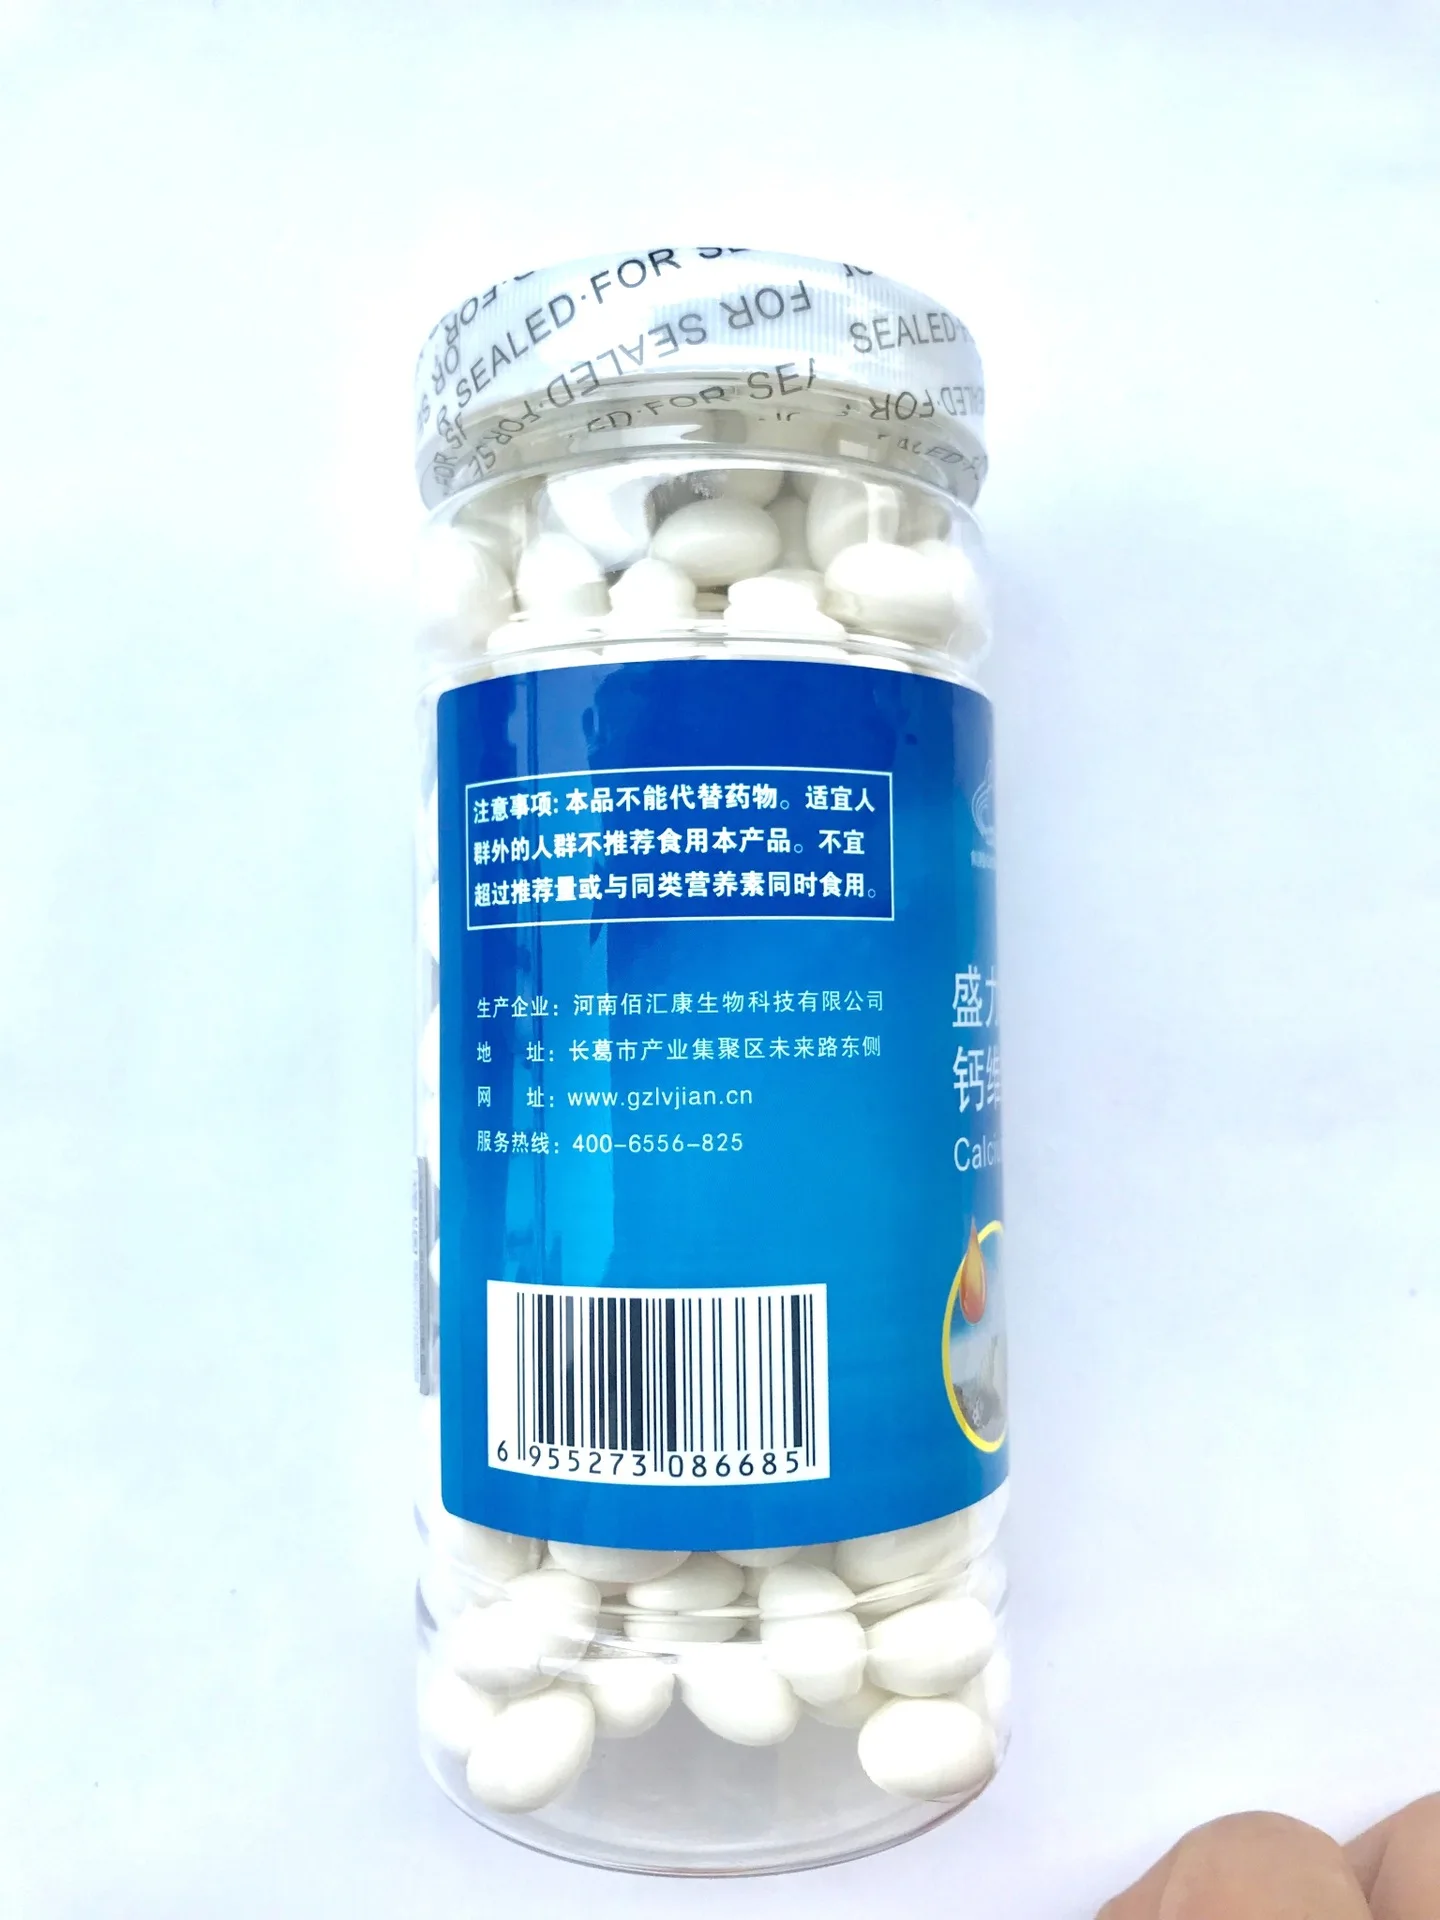 

Shengliyuan Brand Calcium Vitamin D Soft Capsule 300G (1.0G/Granule * 300 Tablets) Calcium Supplement, Quantity Discounts